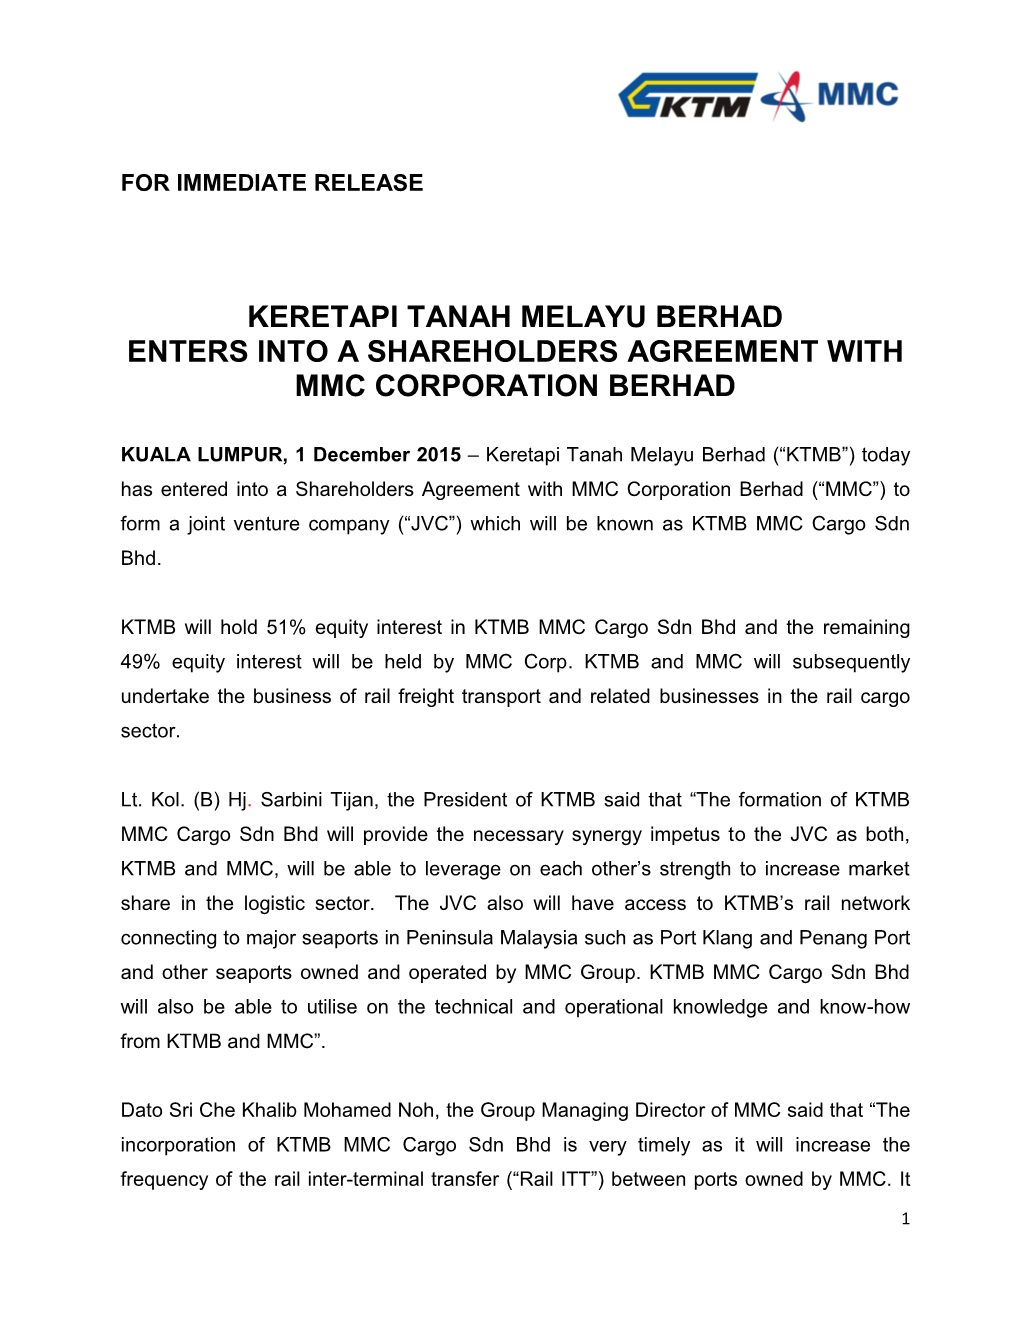 Keretapi Tanah Melayu Berhad Enters Into a Shareholders Agreement with Mmc Corporation Berhad